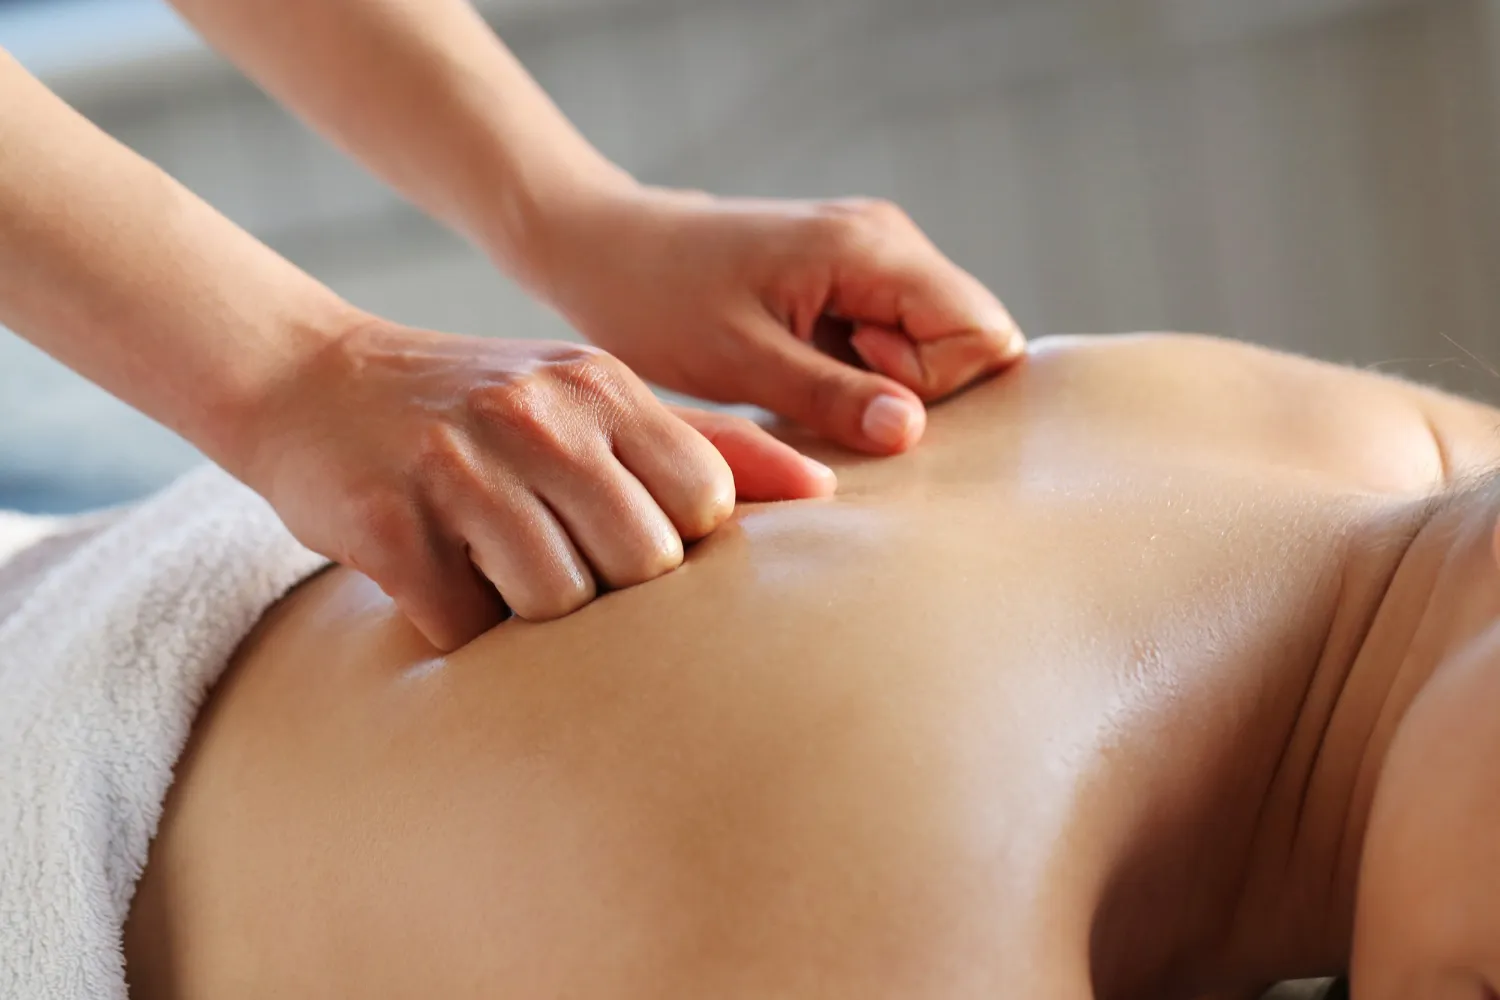 Nuru massage Sexy massage Special massage Erotic massage Massage near me Massage bangkok Best massage